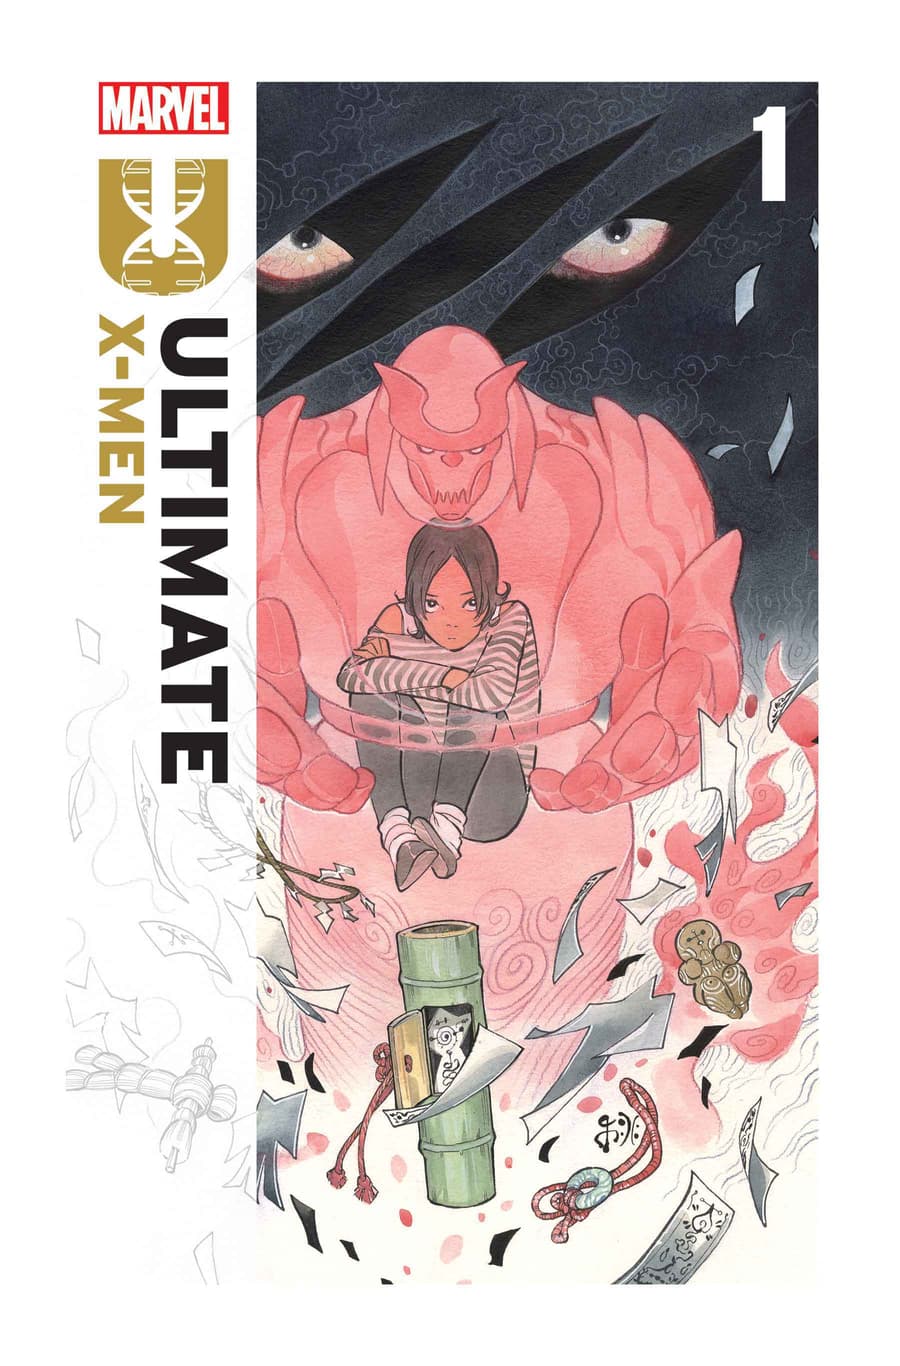 ULTIMATE X-MEN #1 cover by Peach Momoko